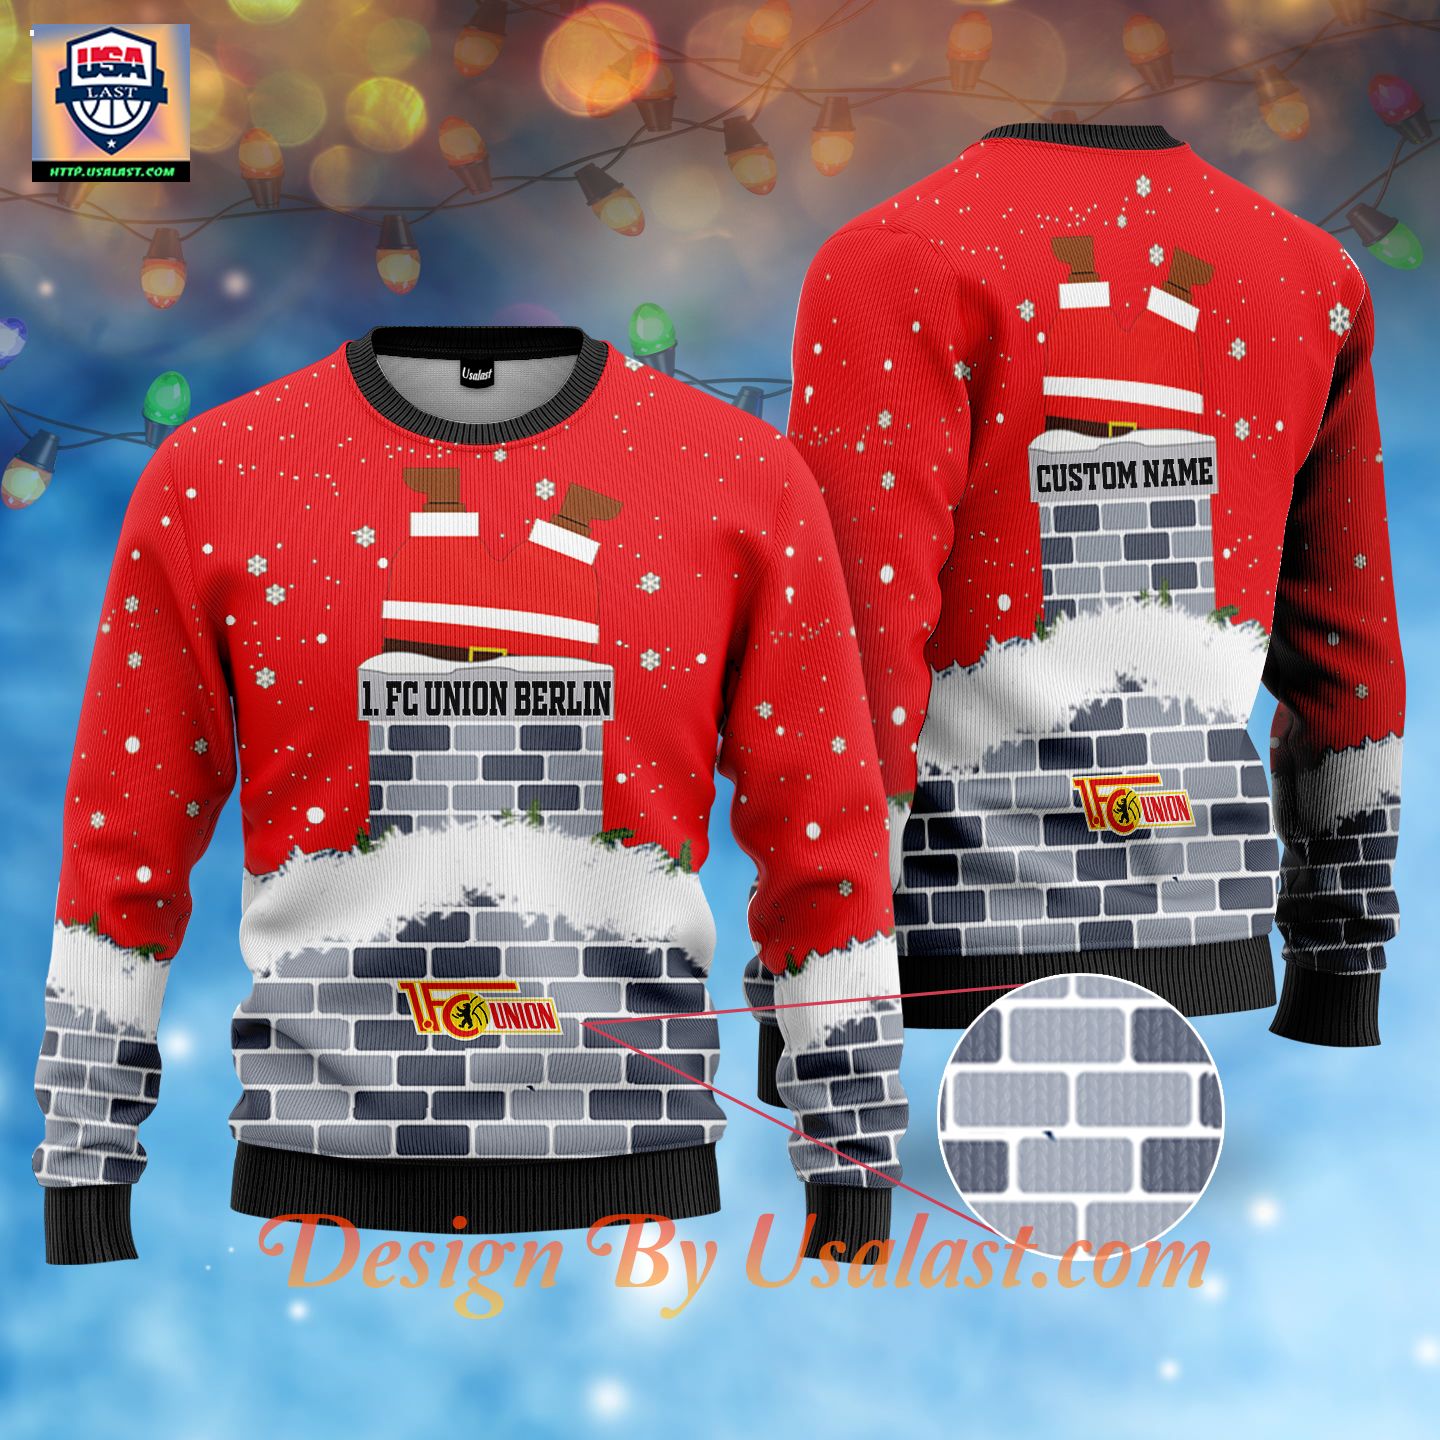 New 1. FC Union Berlin Custom Name Ugly Christmas Sweater